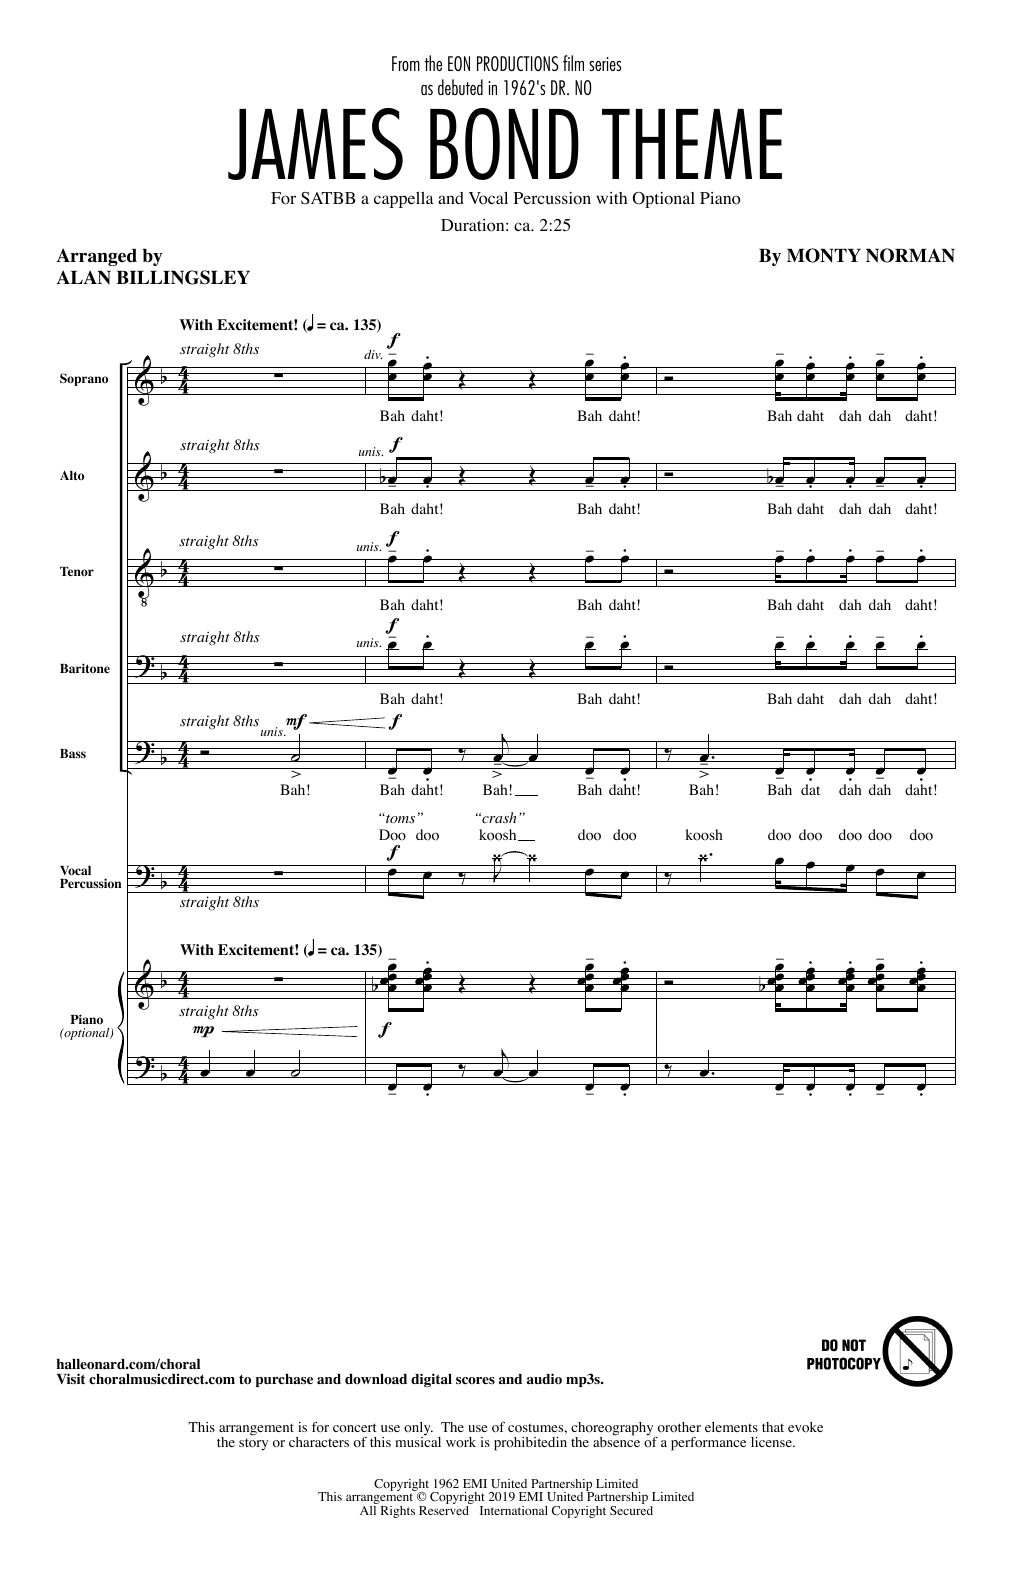 Monty Norman James Bond Theme (arr. Alan Billingsley) Sheet Music Notes & Chords for SATB Choir - Download or Print PDF